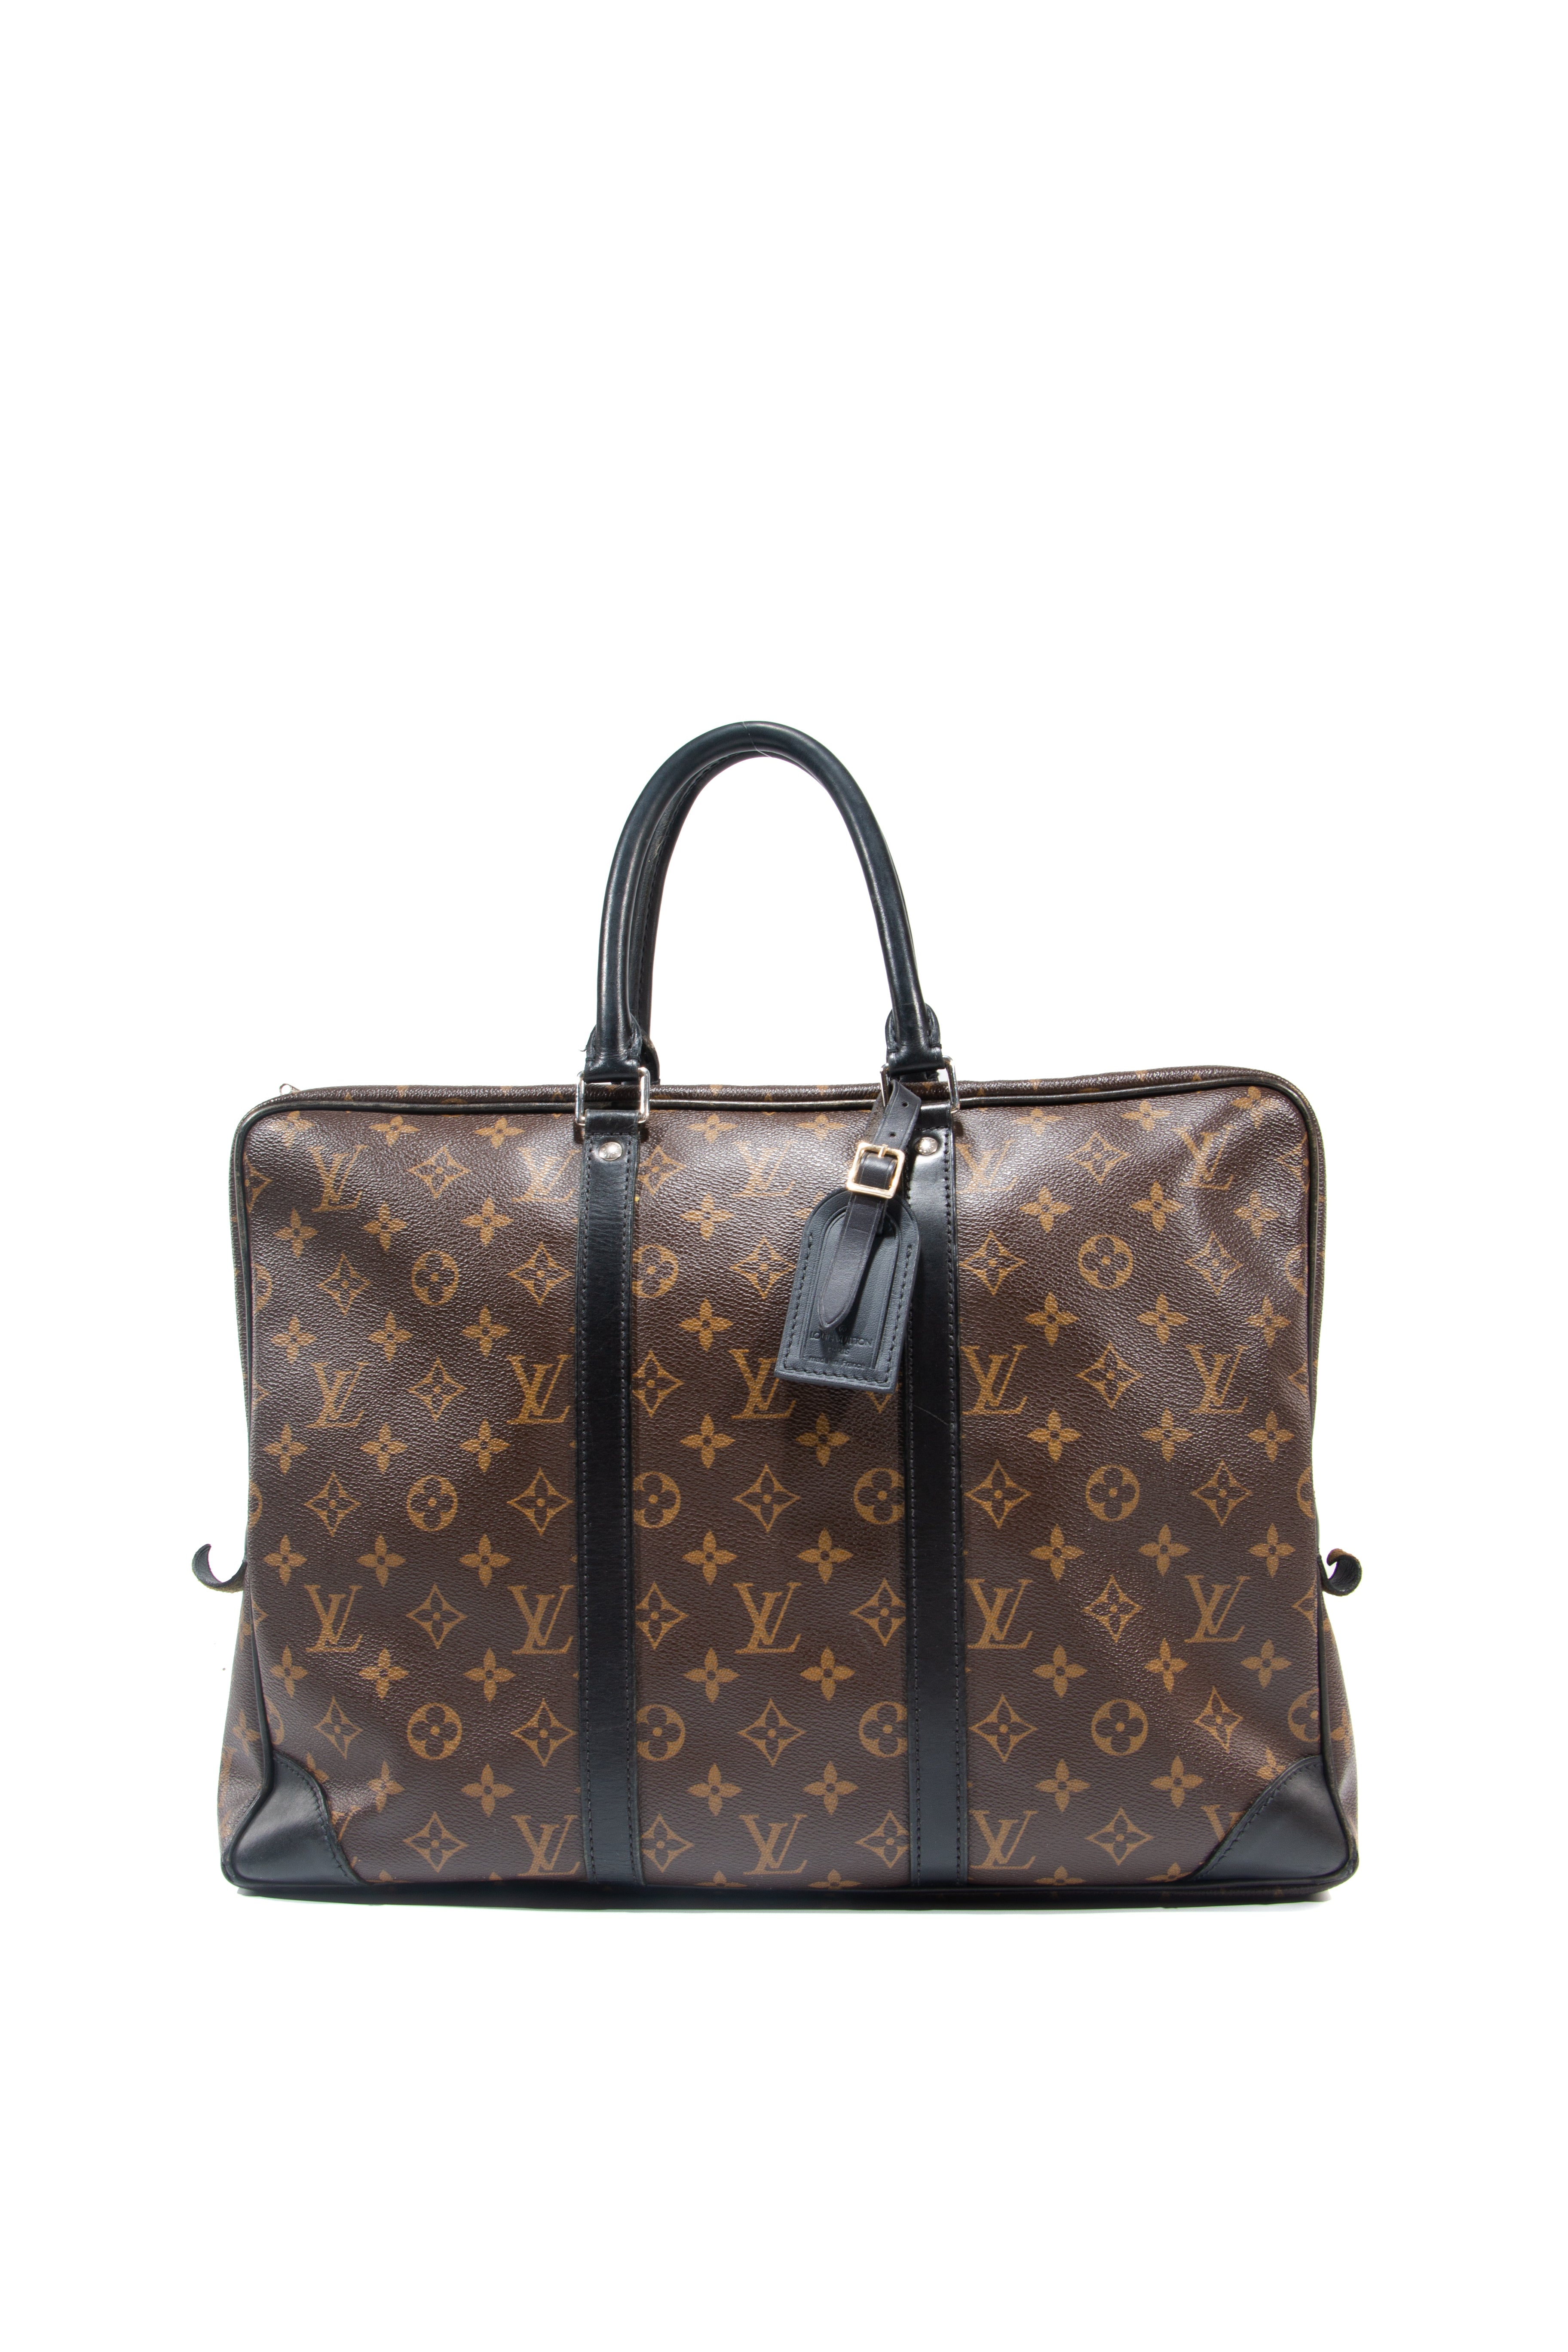 Louis Vuitton tasker - Køb din Louis Vuitton taske hos Collector's Cage – Side 2